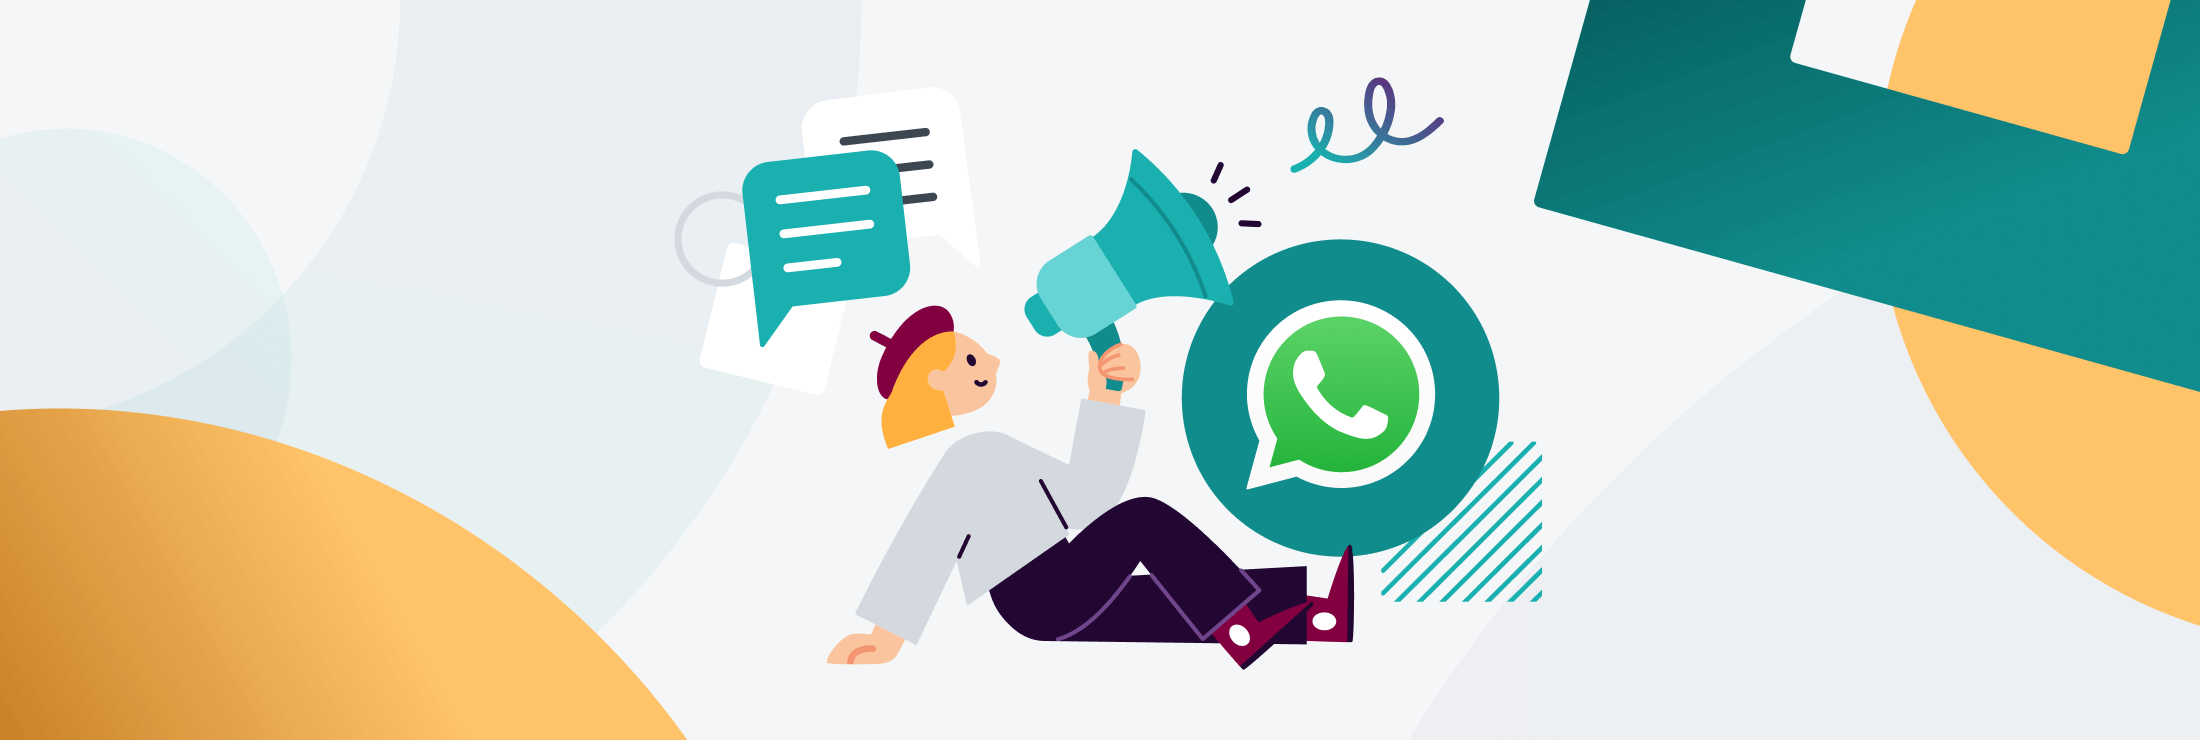 Ejemplos de mensajes de whatsapp business platform